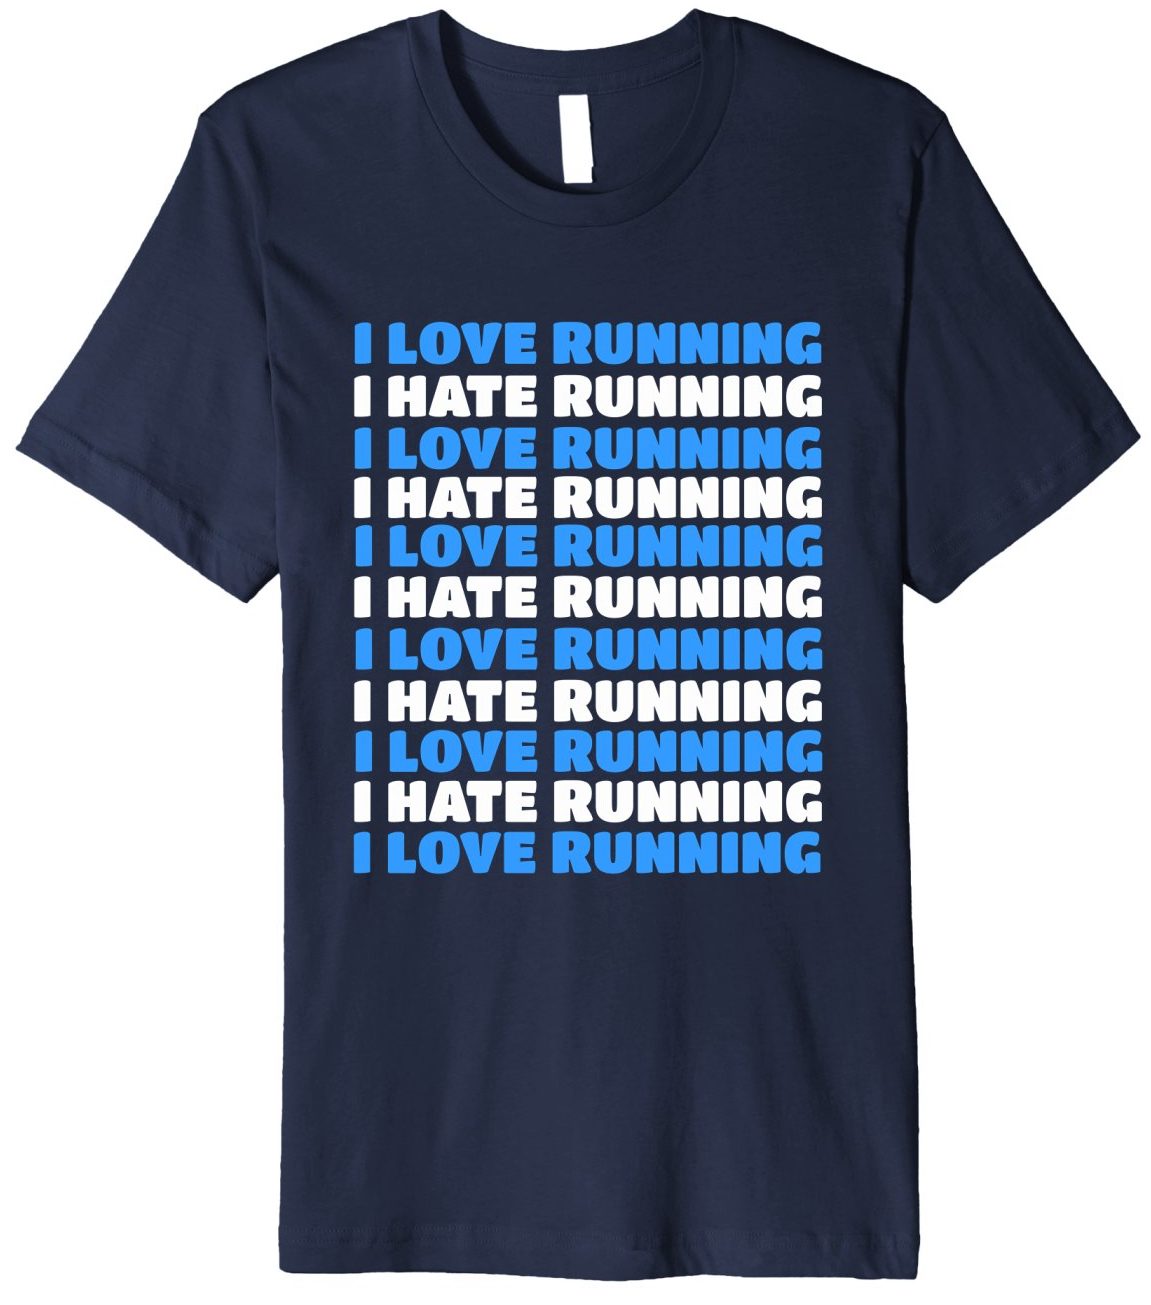 Funny Shirts for Men 2018: I Love Running I Hate Running Tee